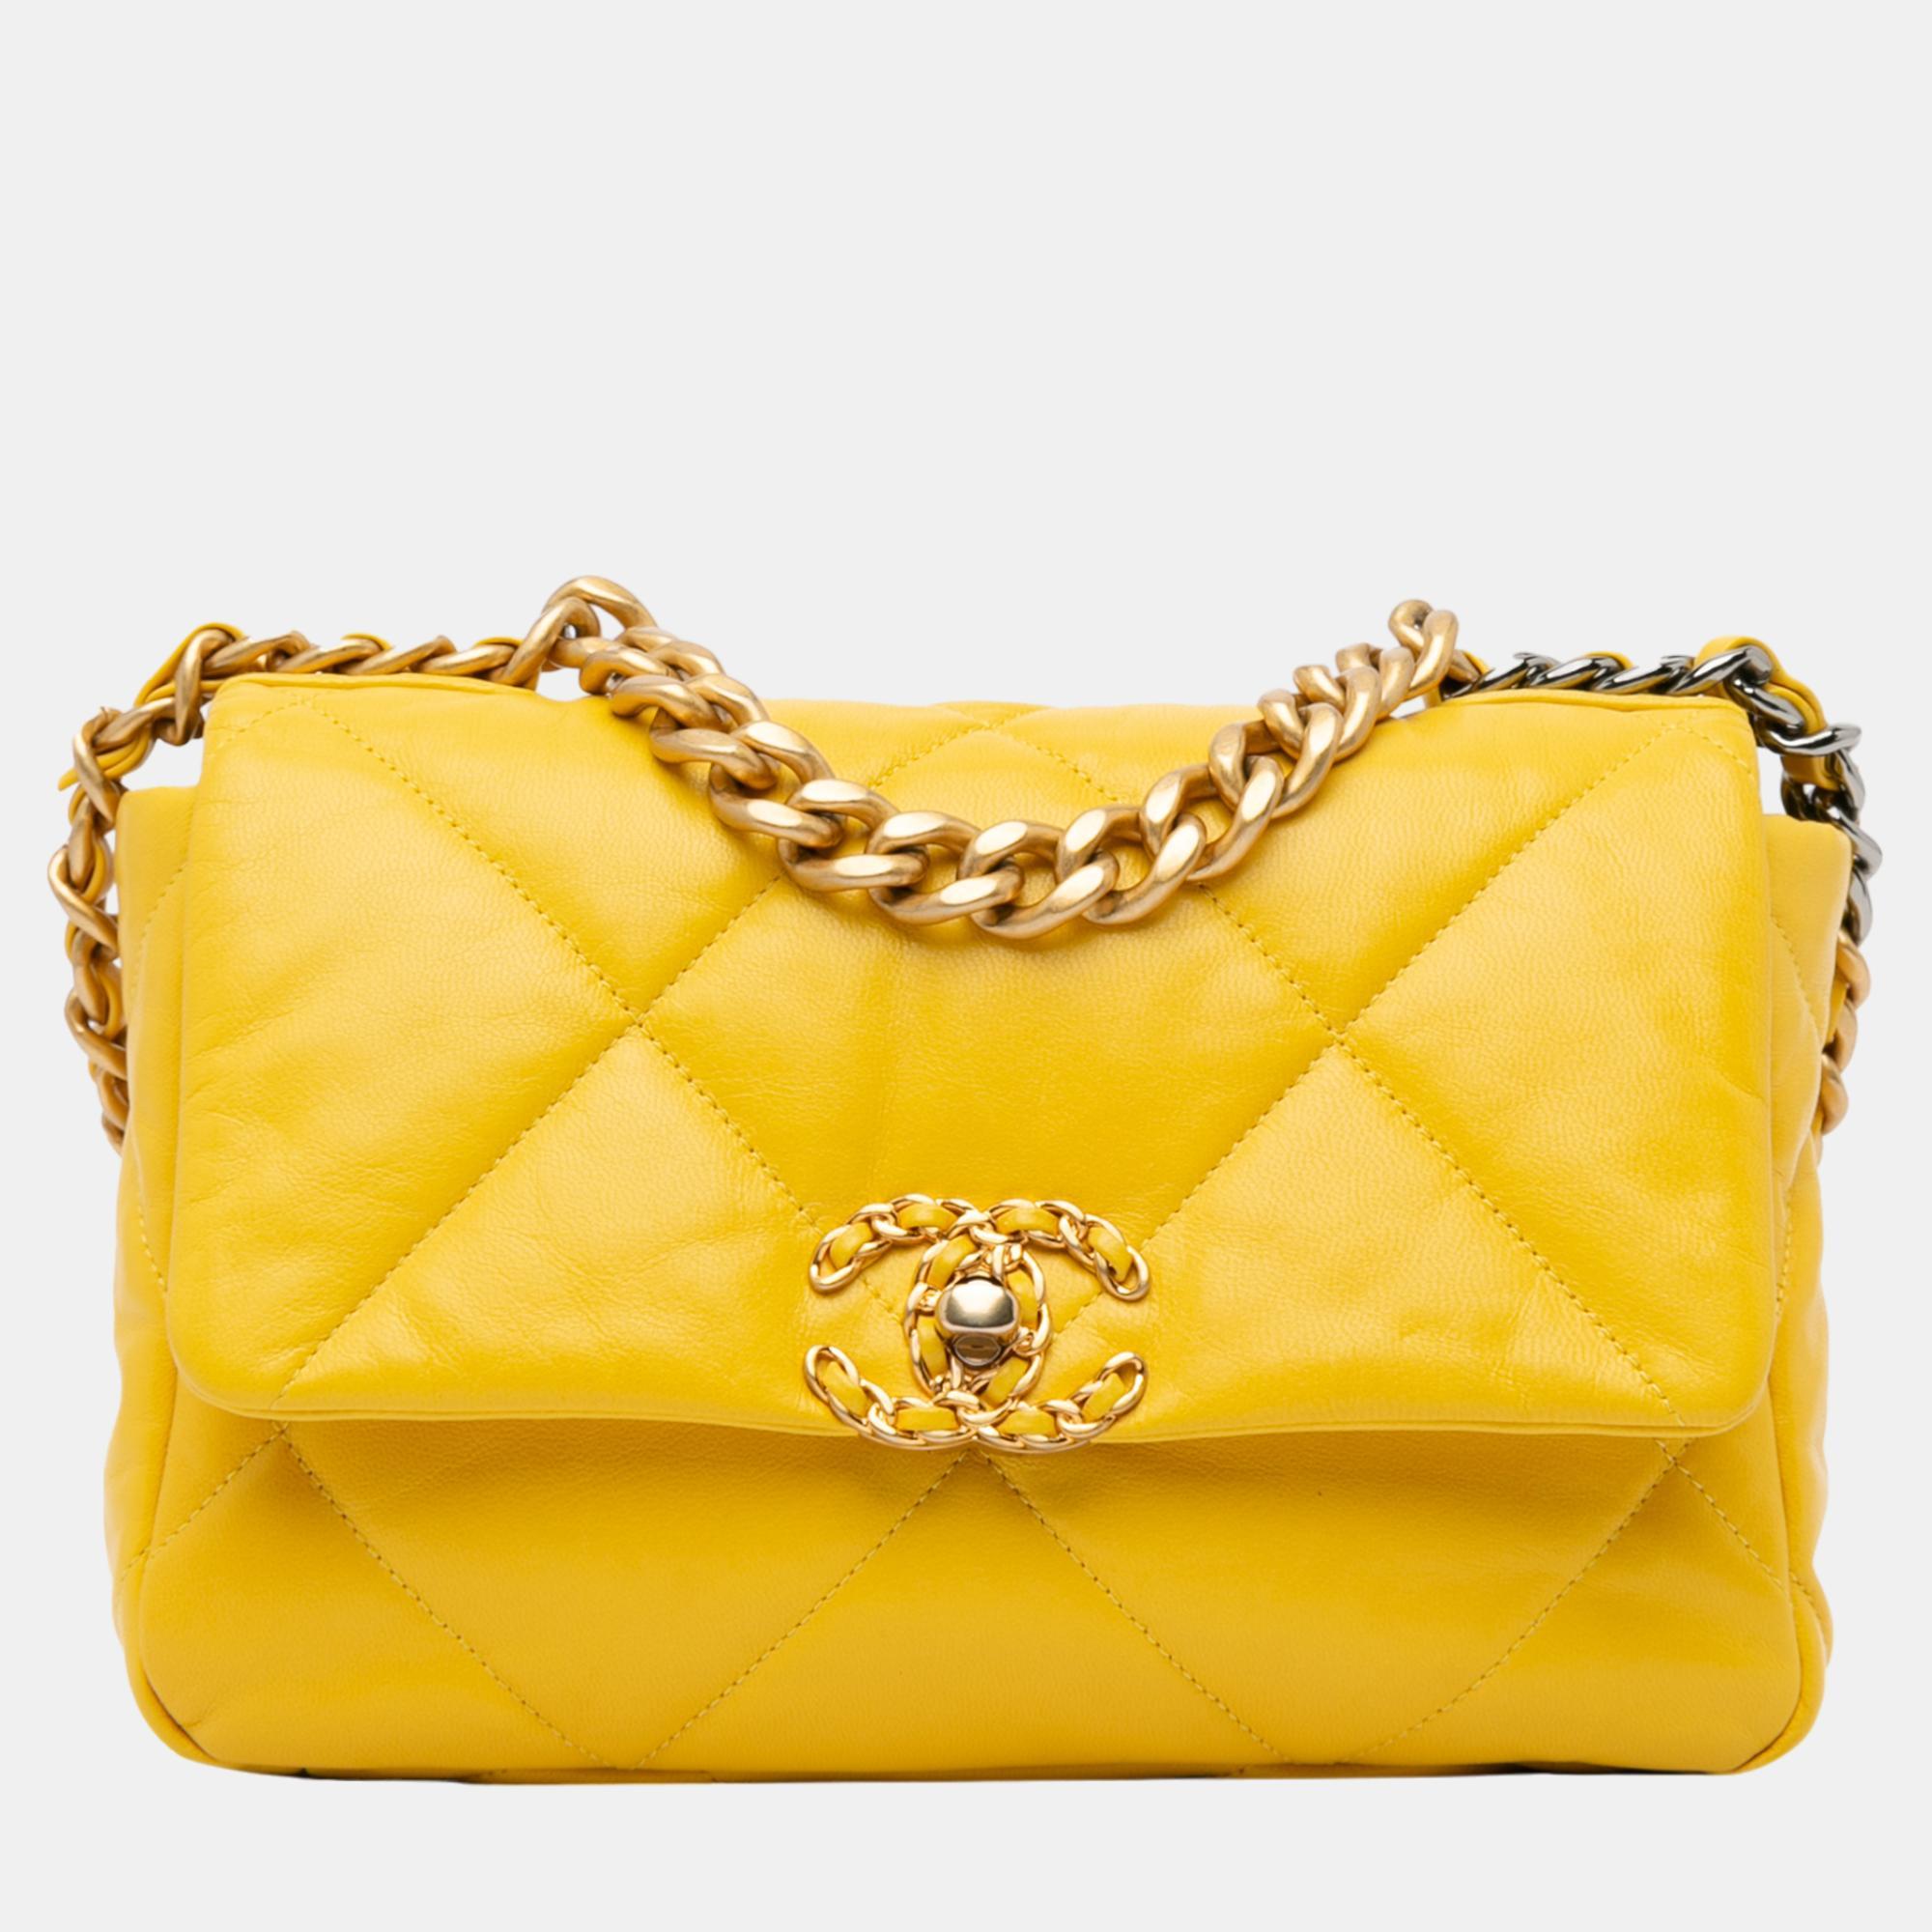 Chanel yellow medium lambskin 19 flap bag